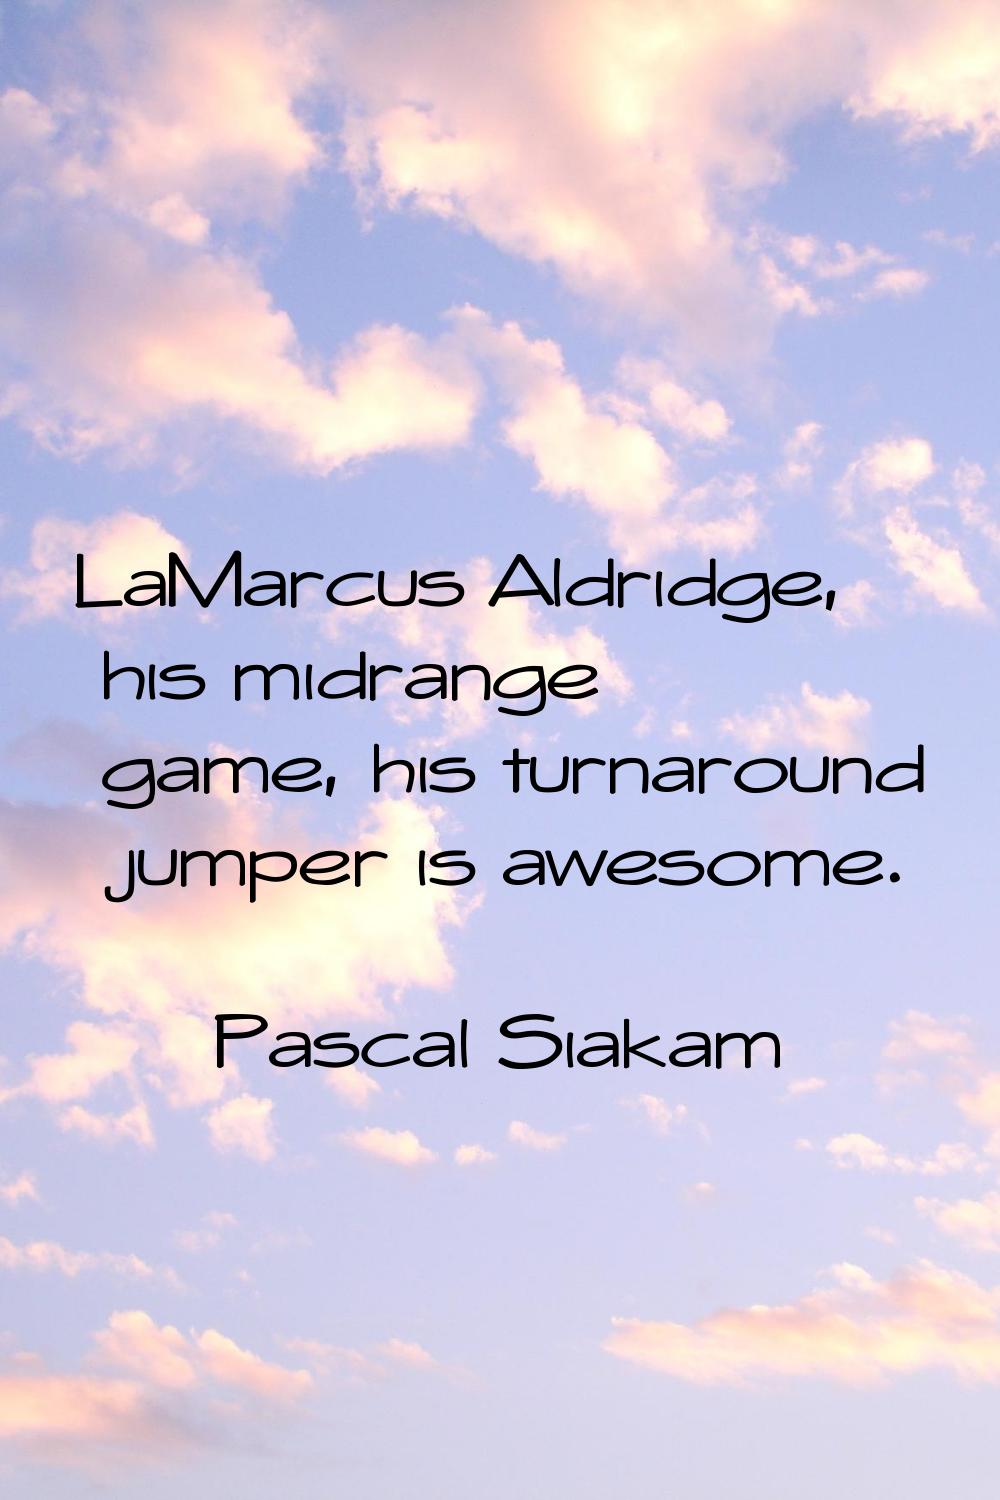 LaMarcus Aldridge, his midrange game, his turnaround jumper is awesome.